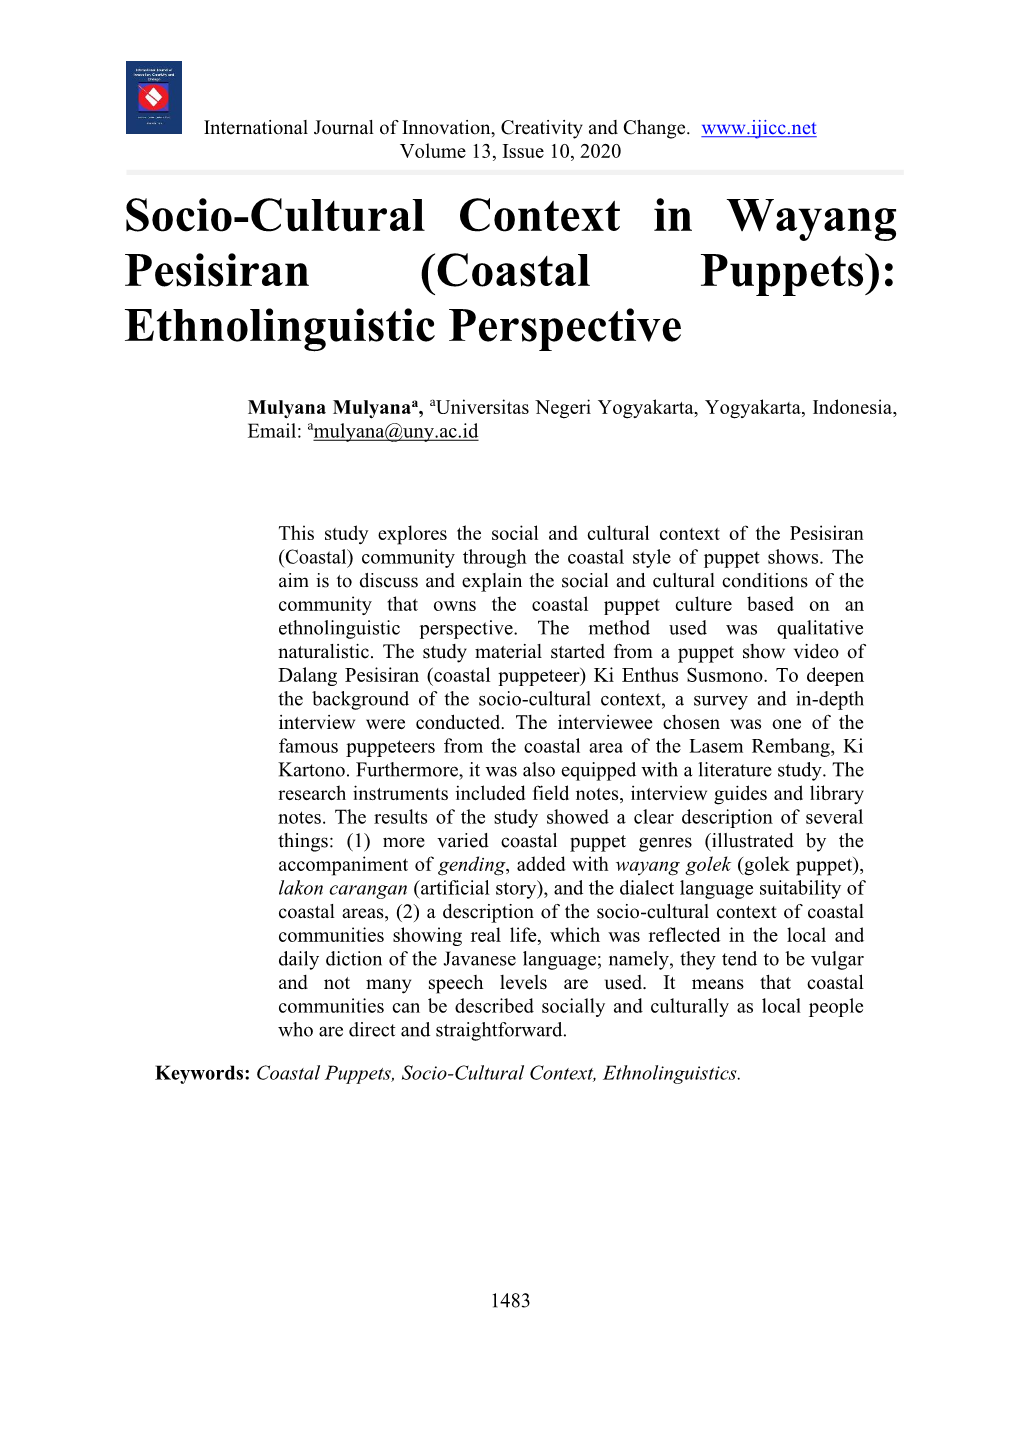 Socio-Cultural Context in Wayang Pesisiran (Coastal Puppets): Ethnolinguistic Perspective